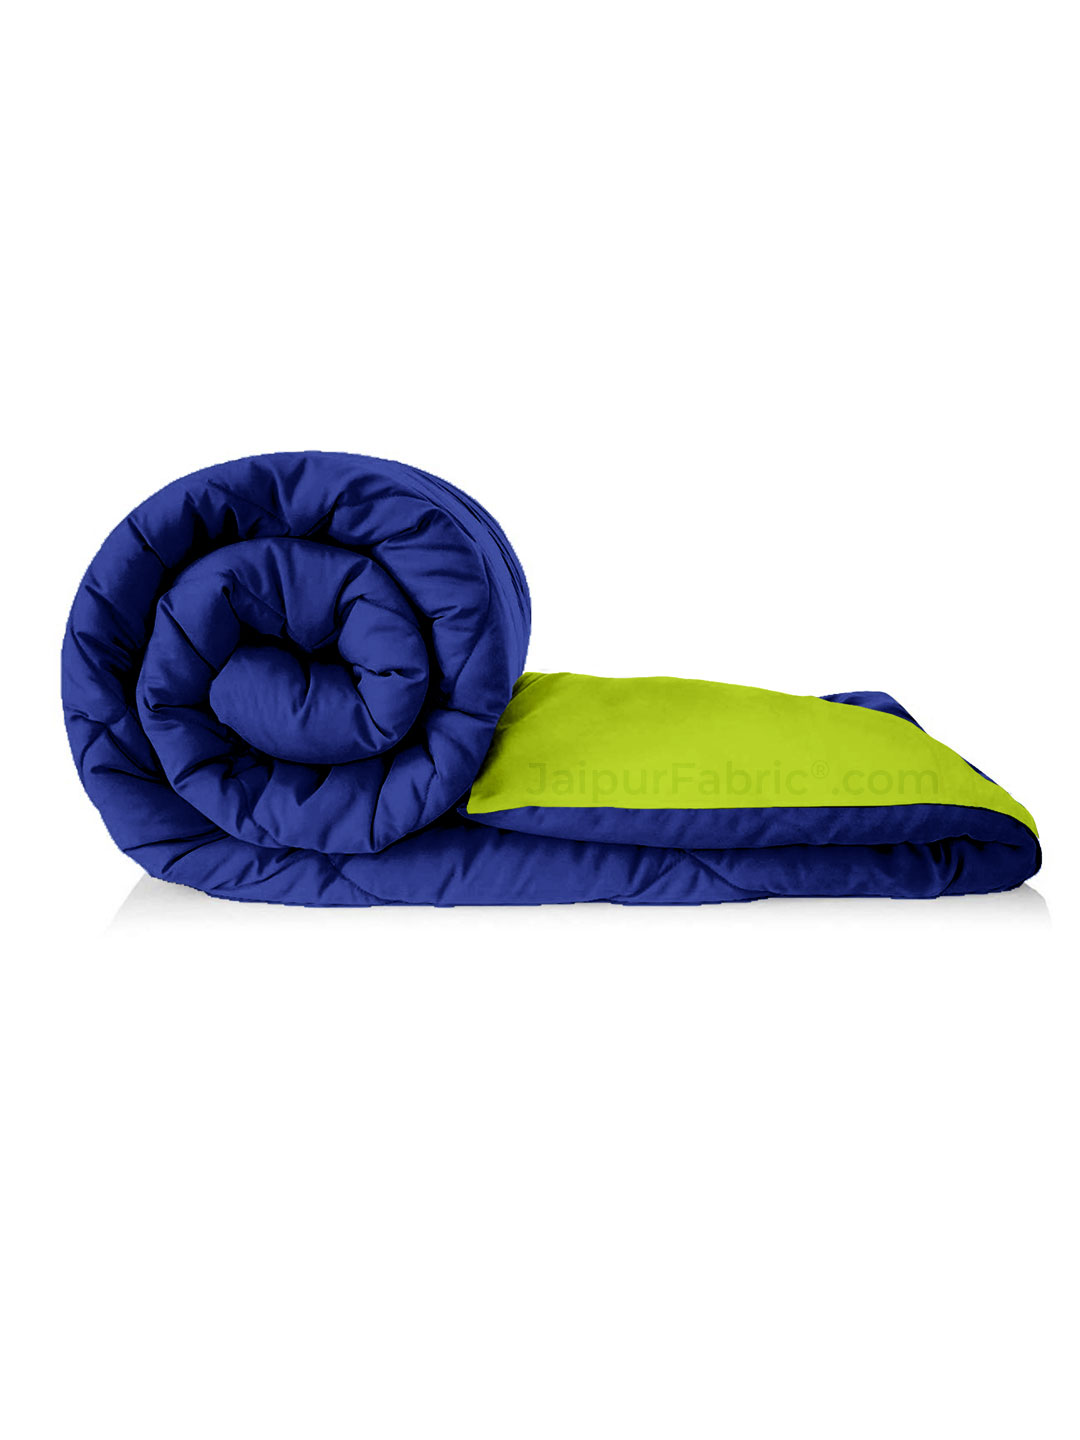 Navy Blue Parrot Green Single Bed Comforter